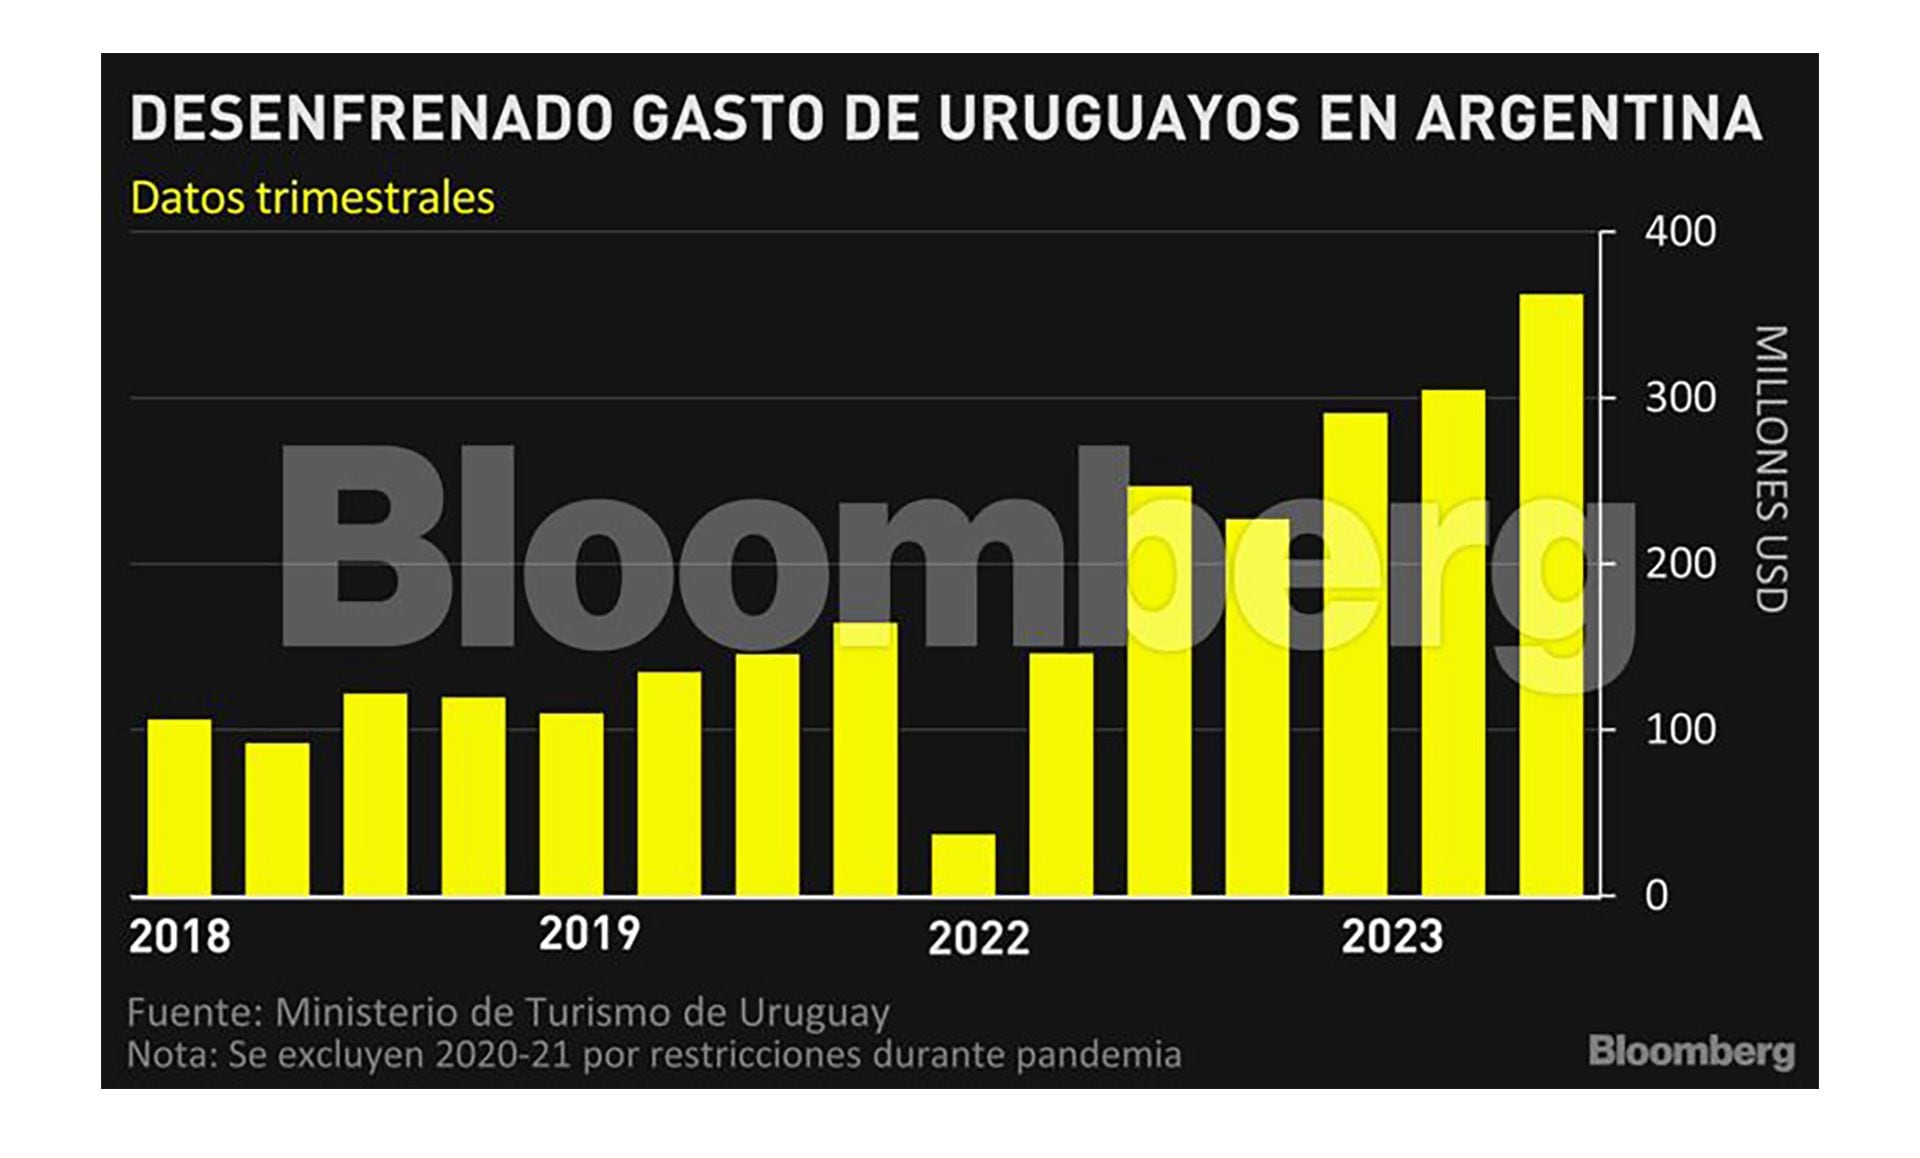 Gastos de uruguayos en Argentina (Bloomberg)